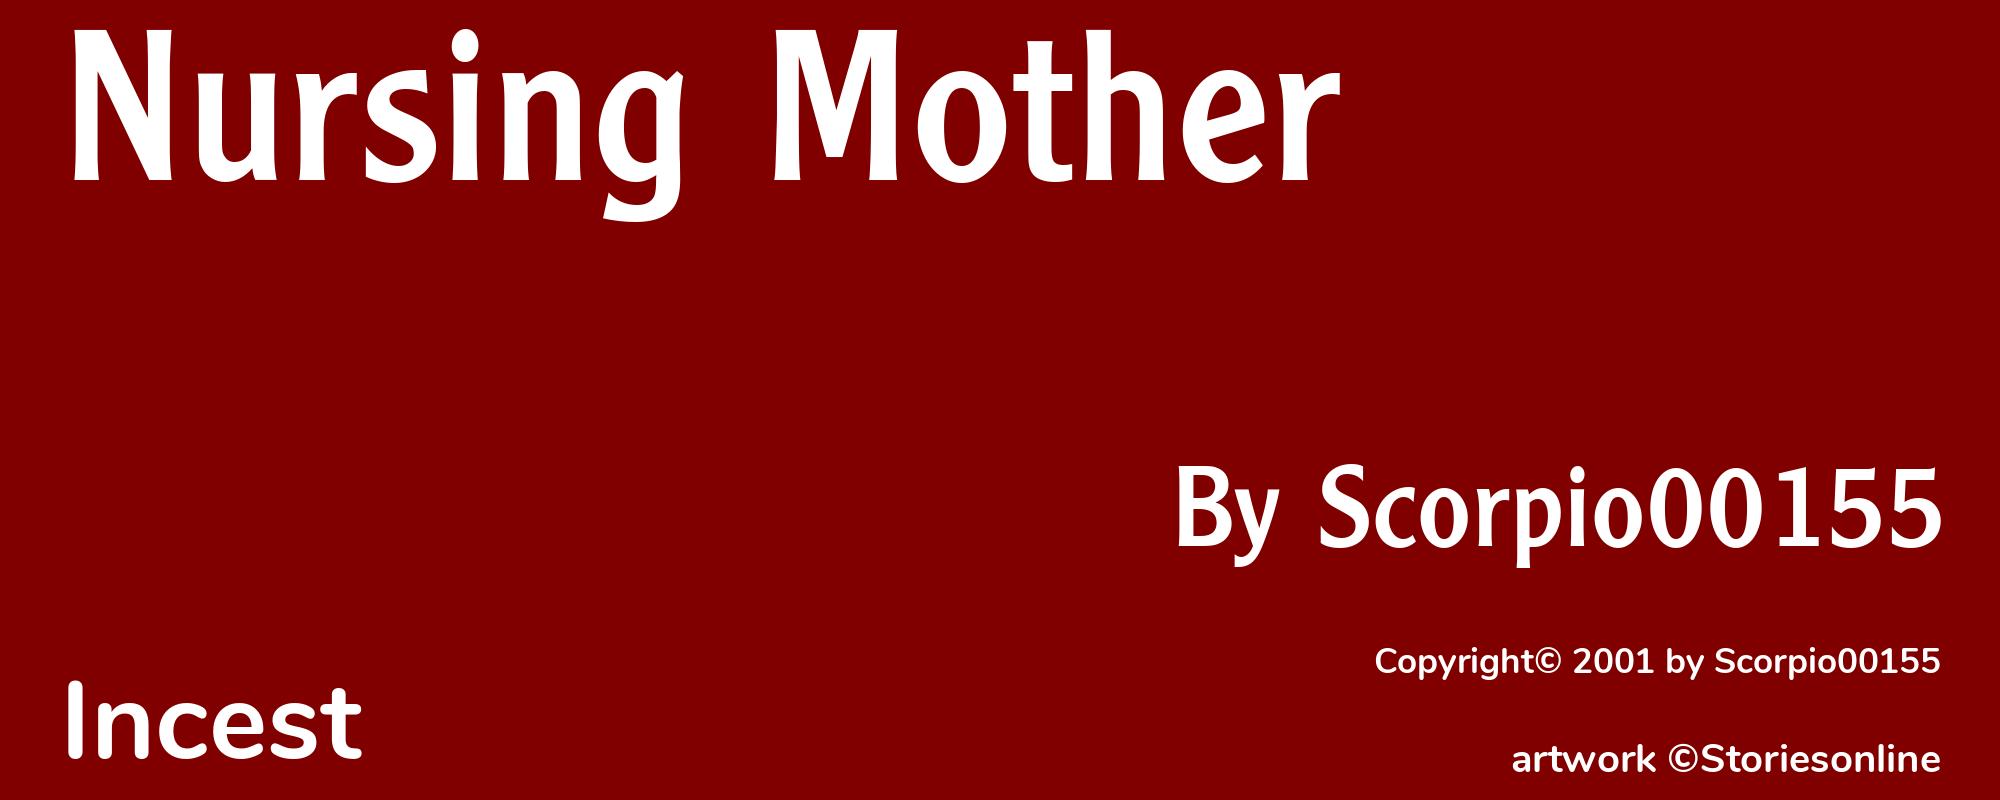 Nursing Mother - Cover